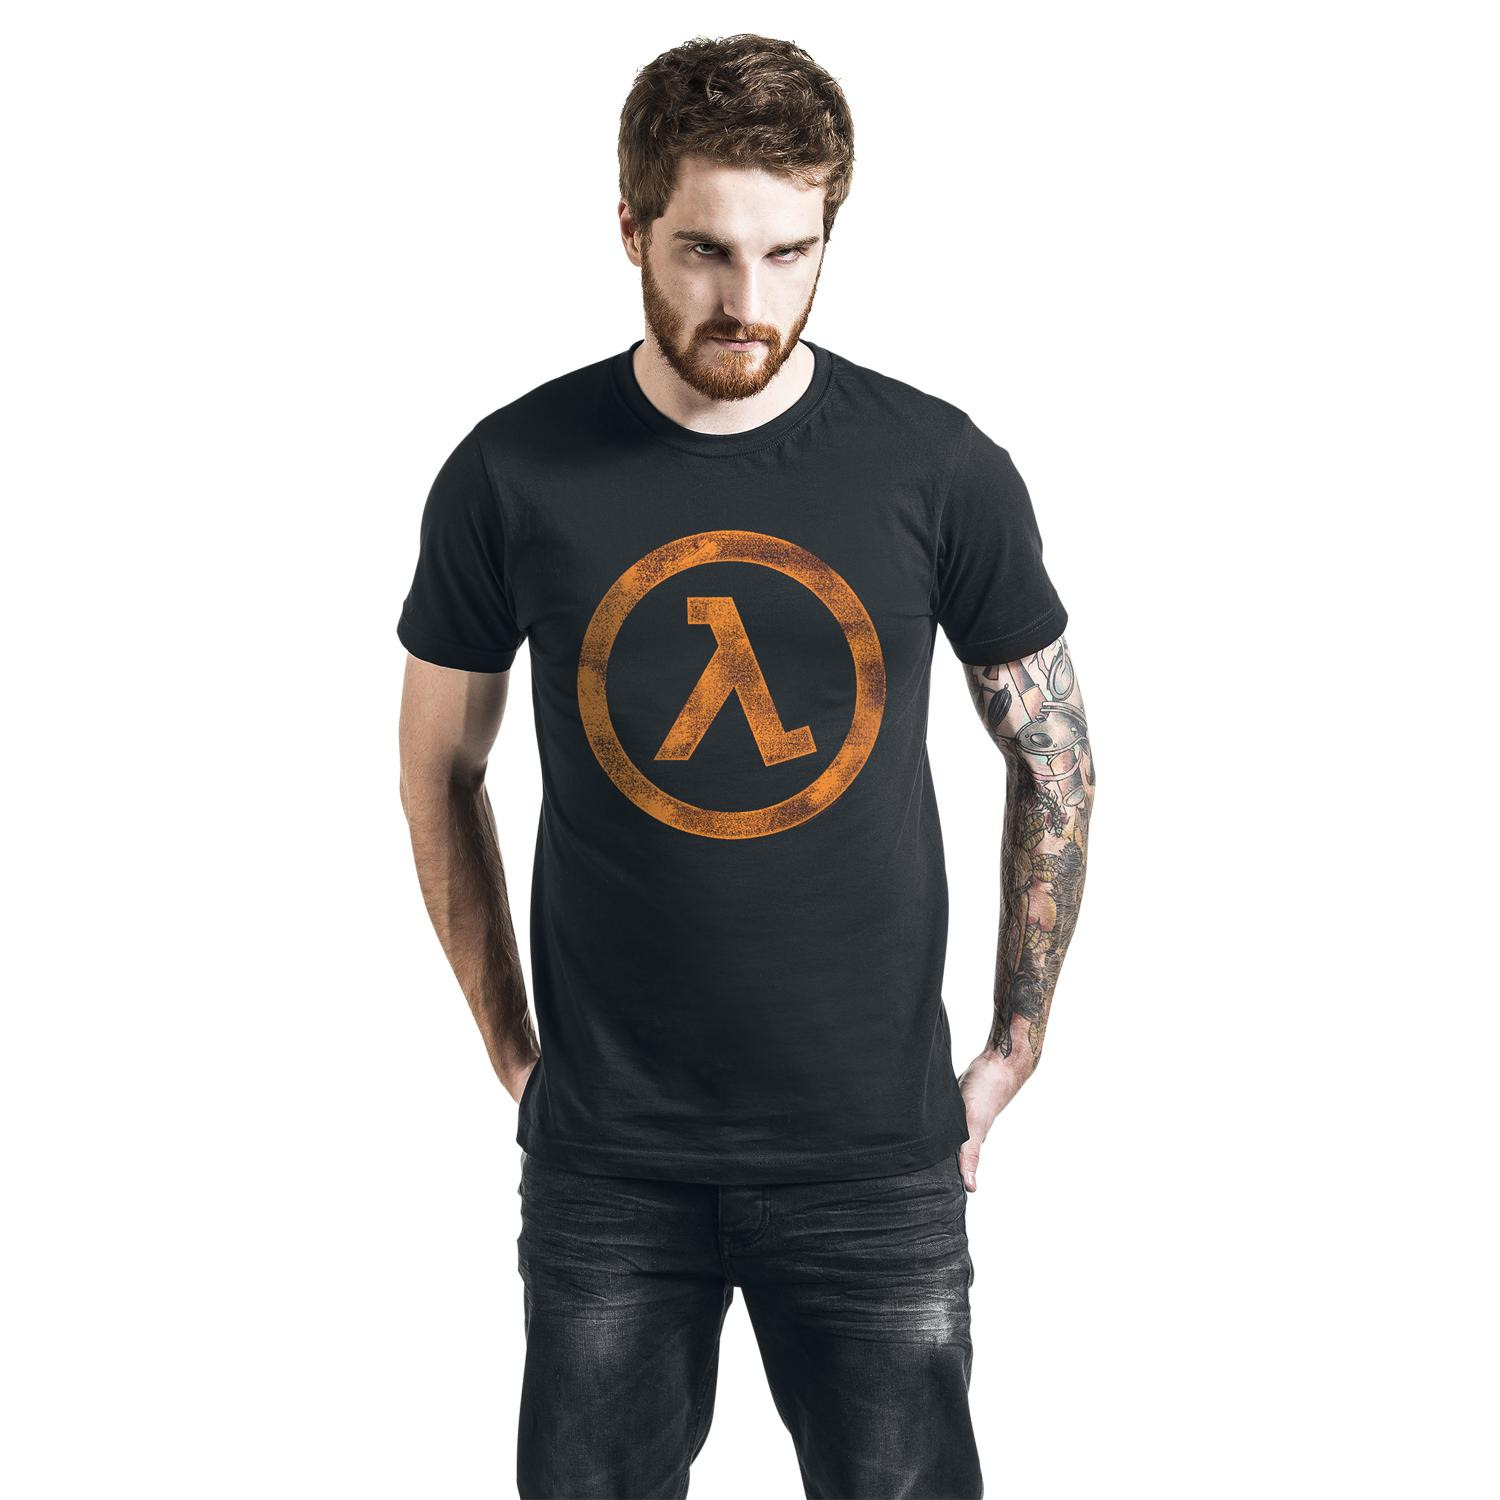 Half Life 2 Game Alyx Vance Costume Guide